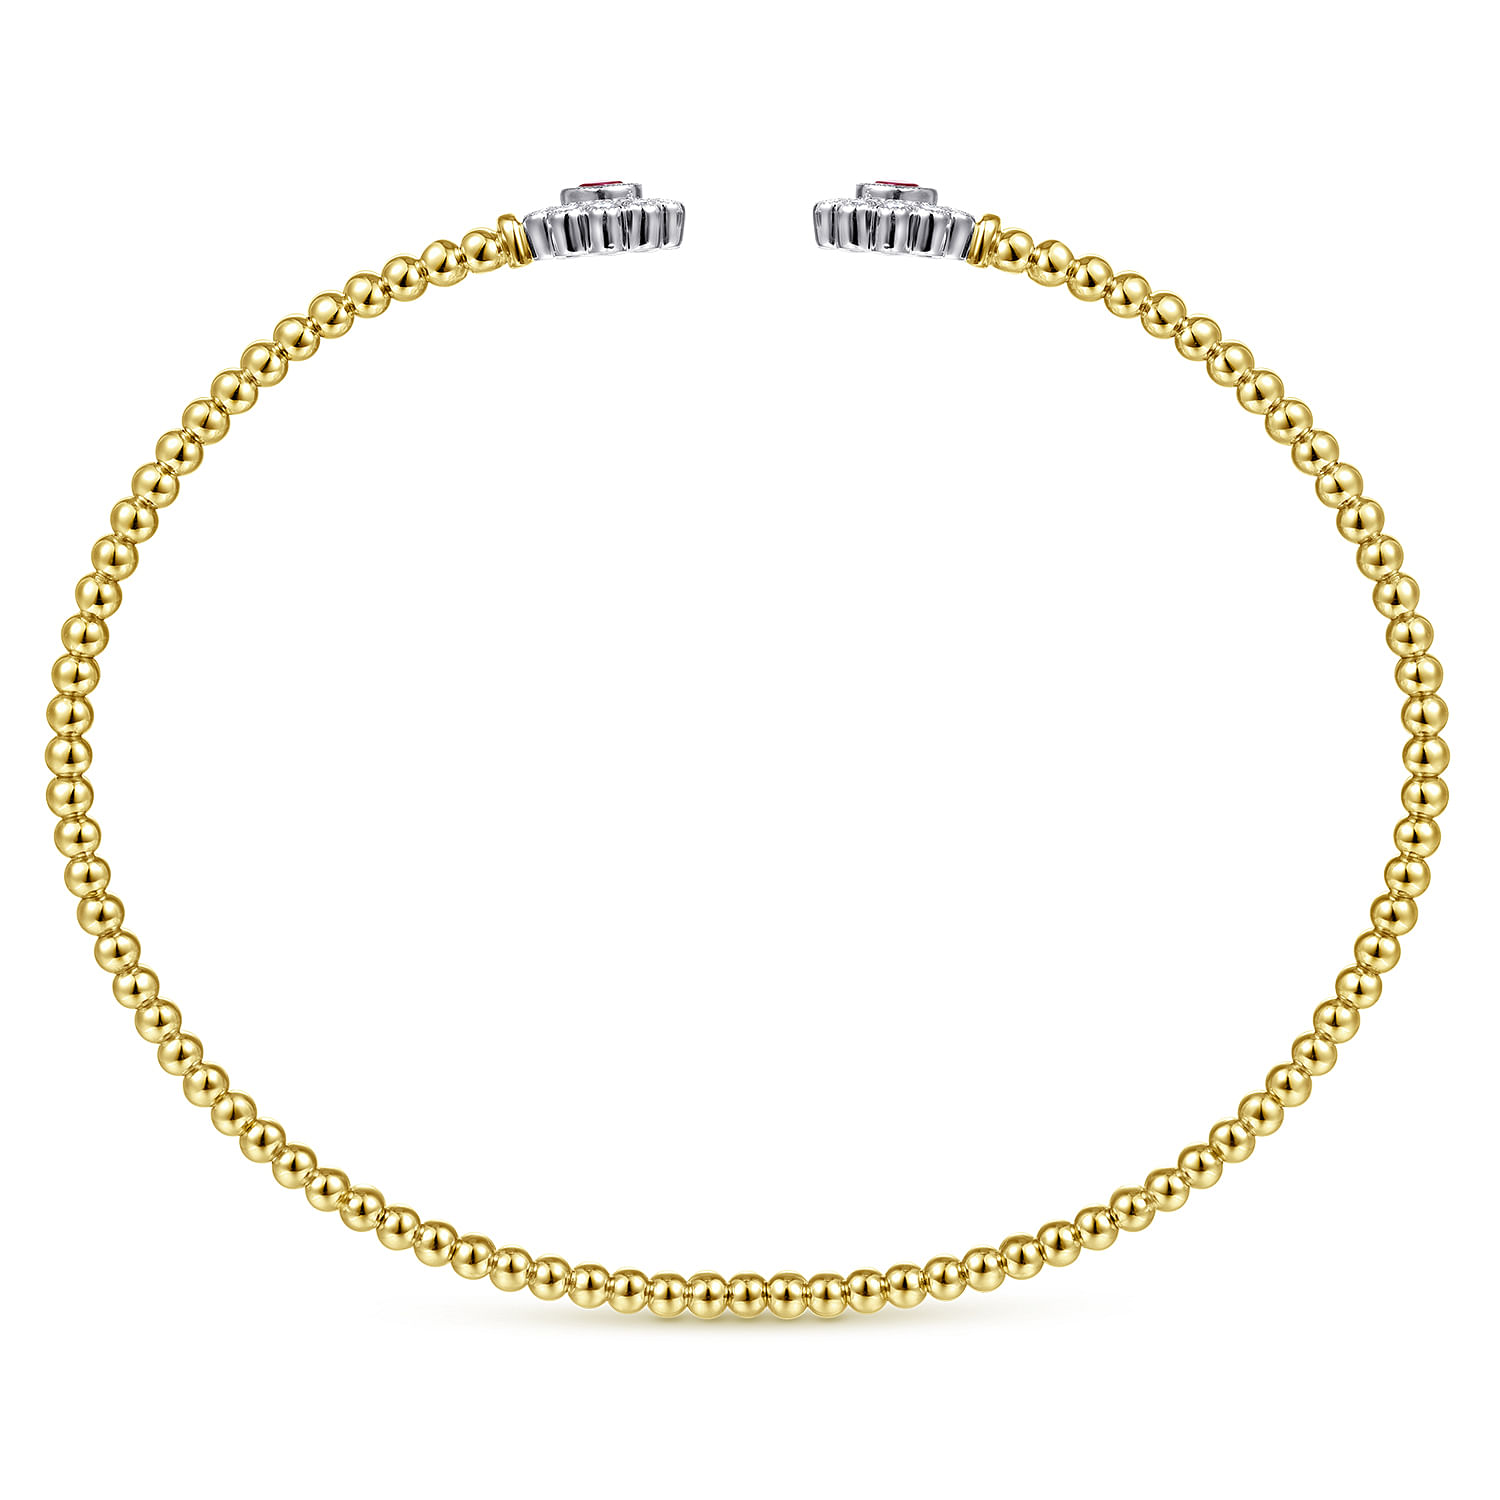 14K White&Yellow Gold Bujukan Split Cuff Bracelet with  Diamond and Ruby Flowers